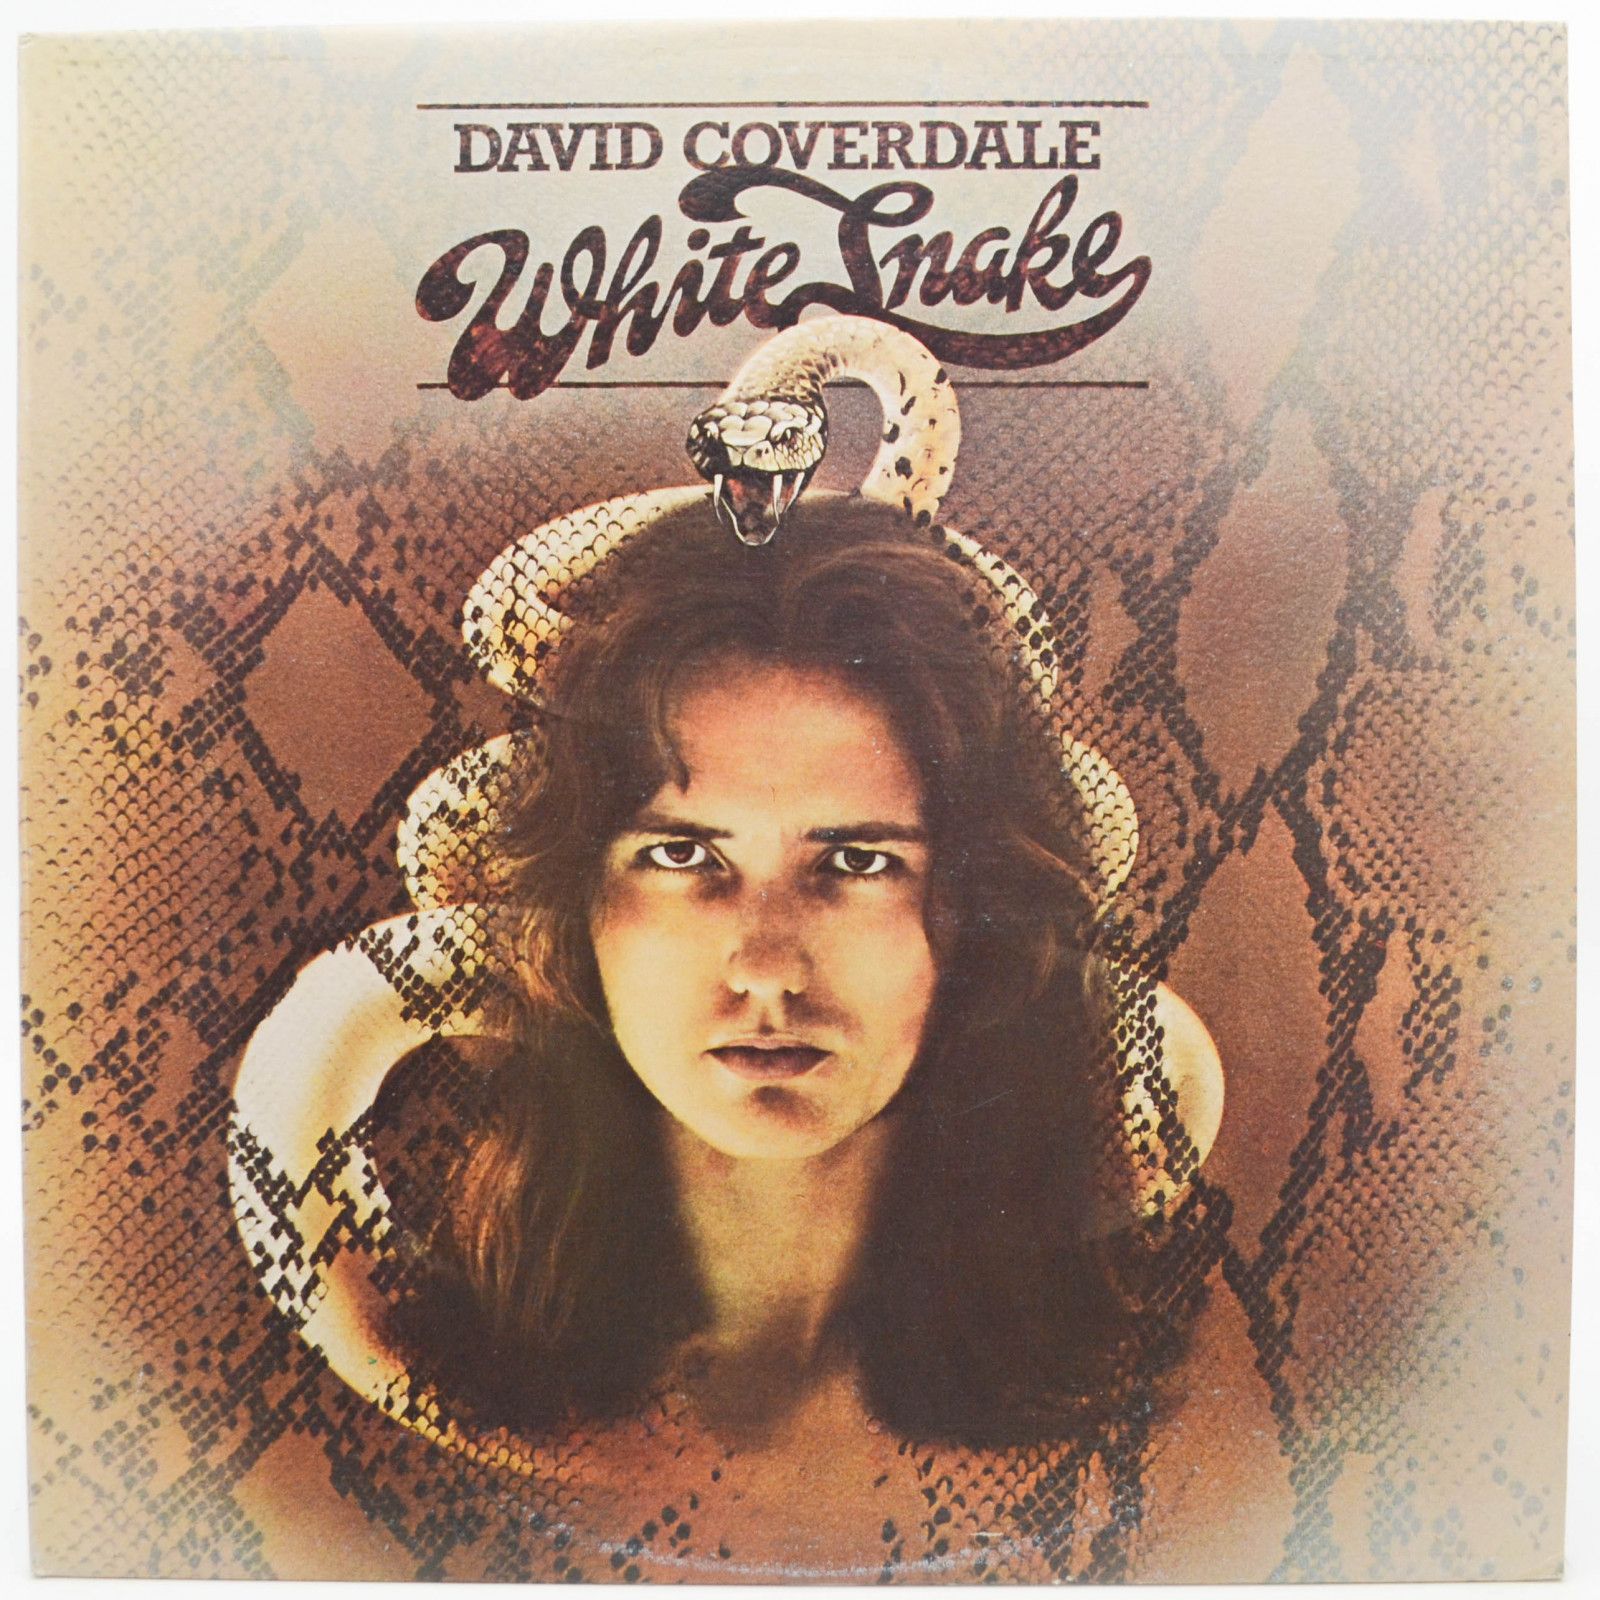 David Coverdale — White Snake, 1977